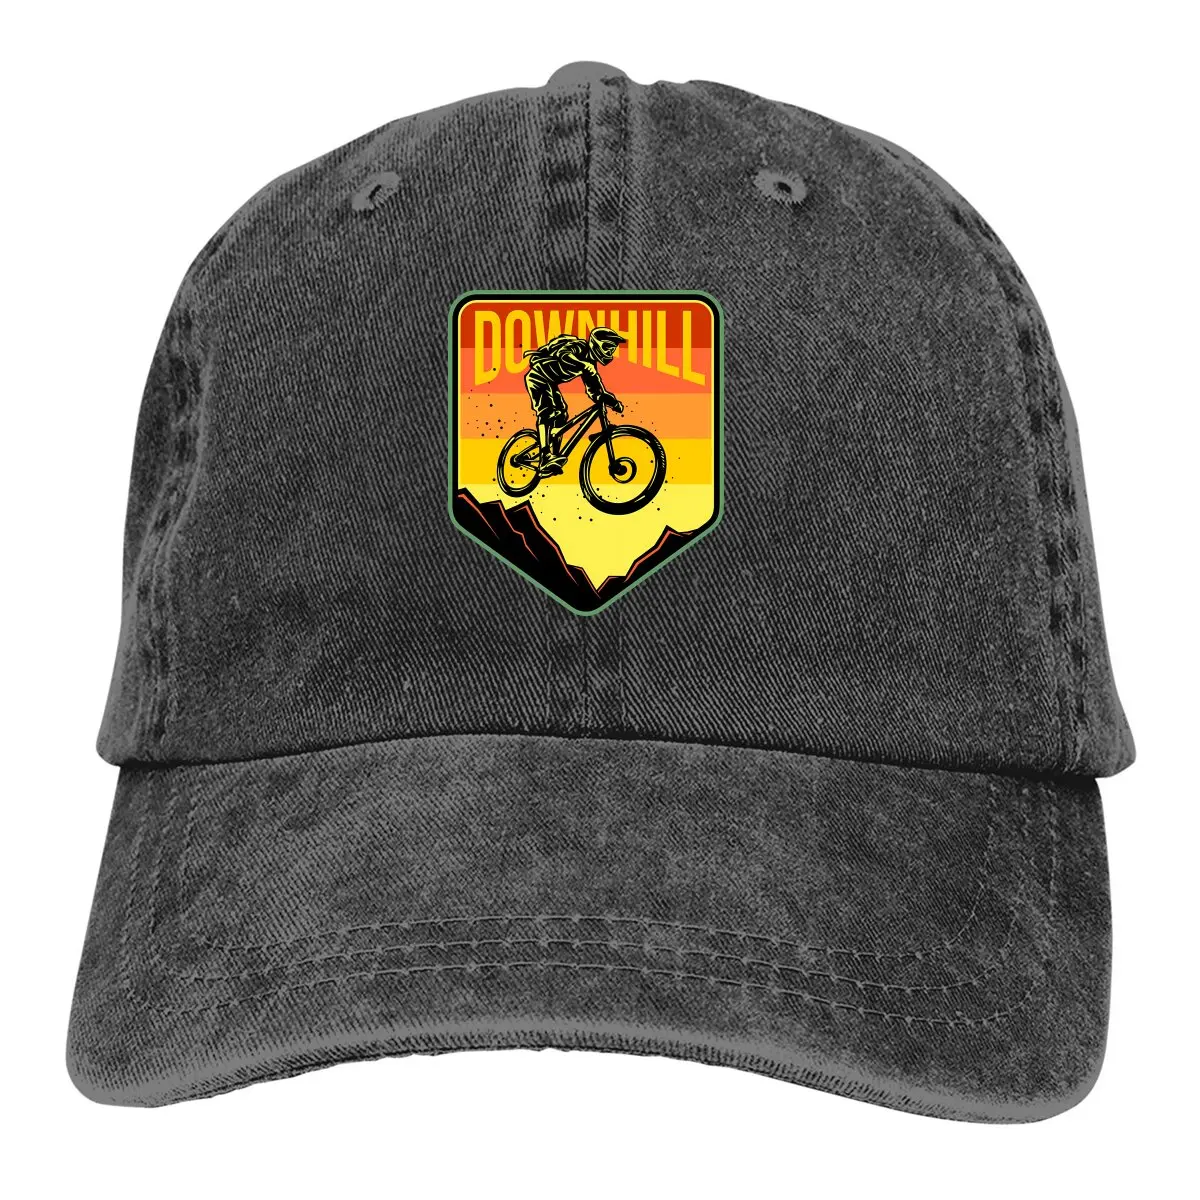 

Downhill Bike Baseball Caps Peaked Cap Cycling MTB Biking Sun Shade Hats for Men